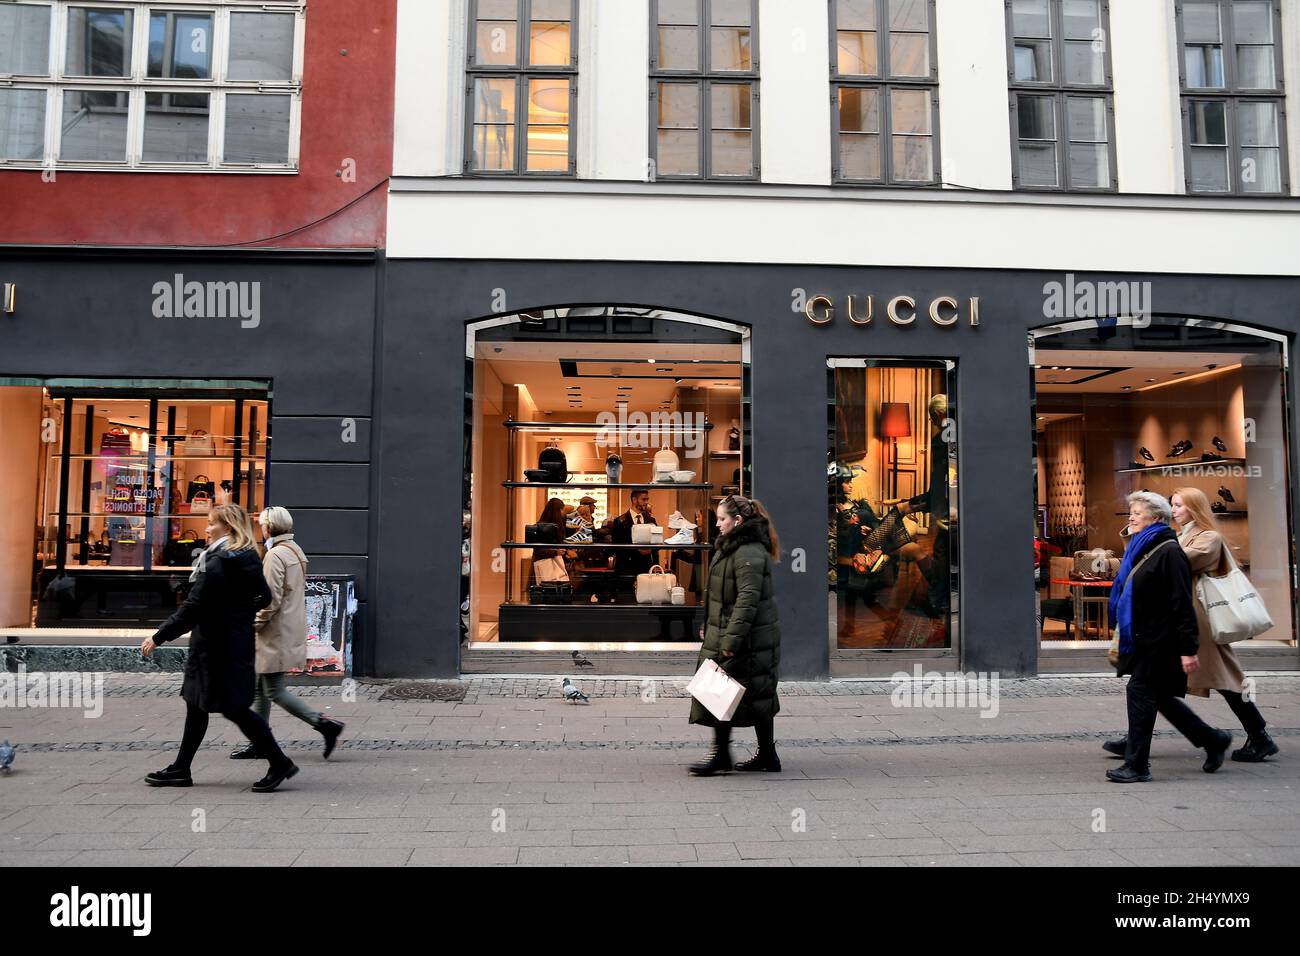 Gucci Store Copenhagen High Resolution Stock Images -